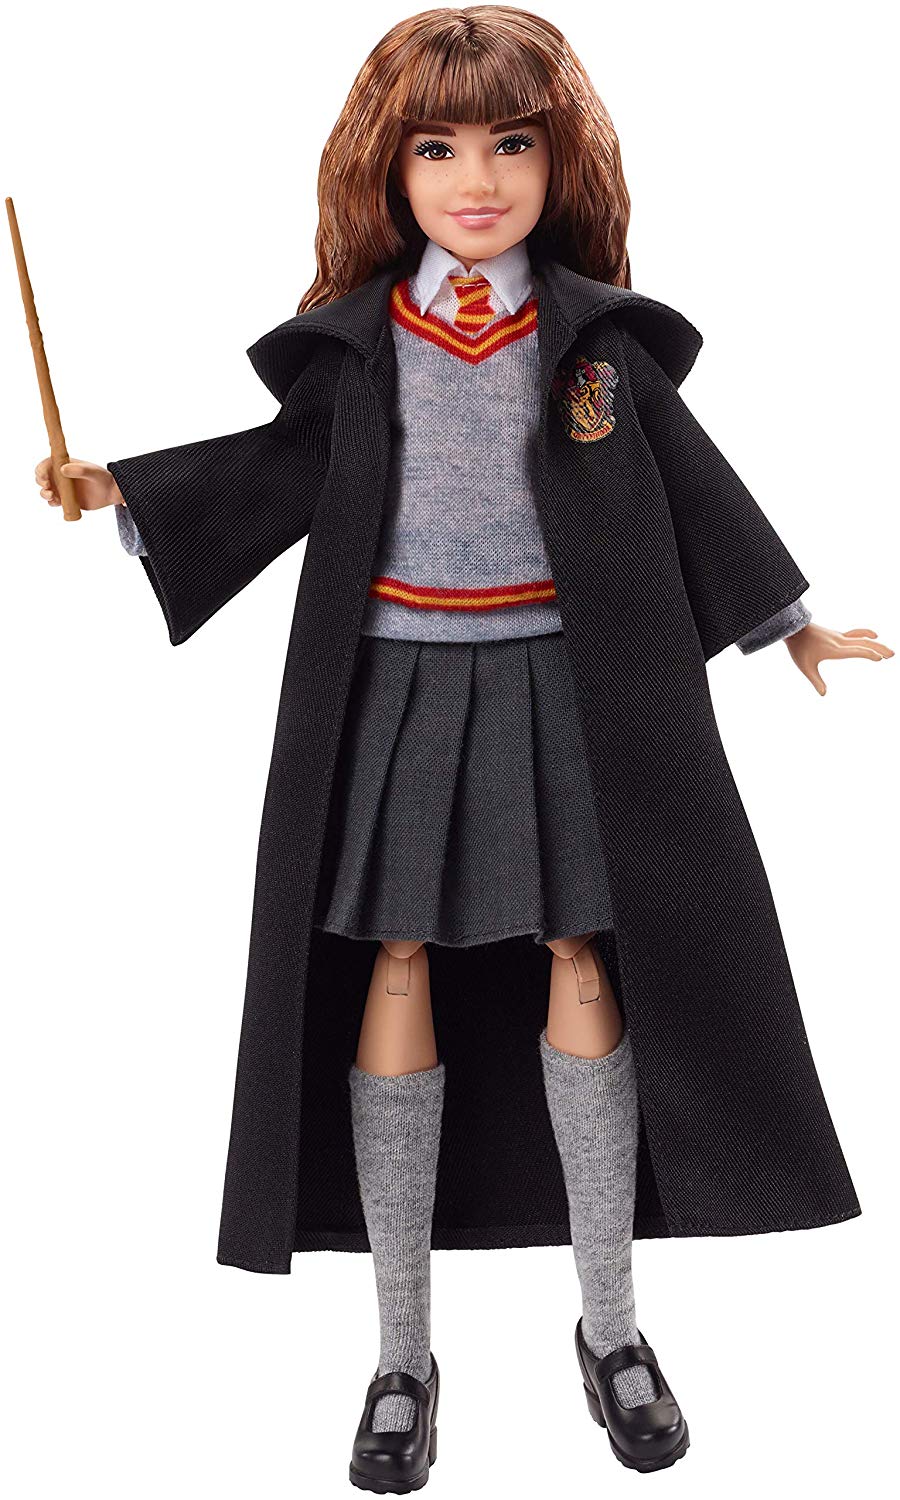 Mattel Fym51 Harry Potter Hermione Granger Doll, 0, 0